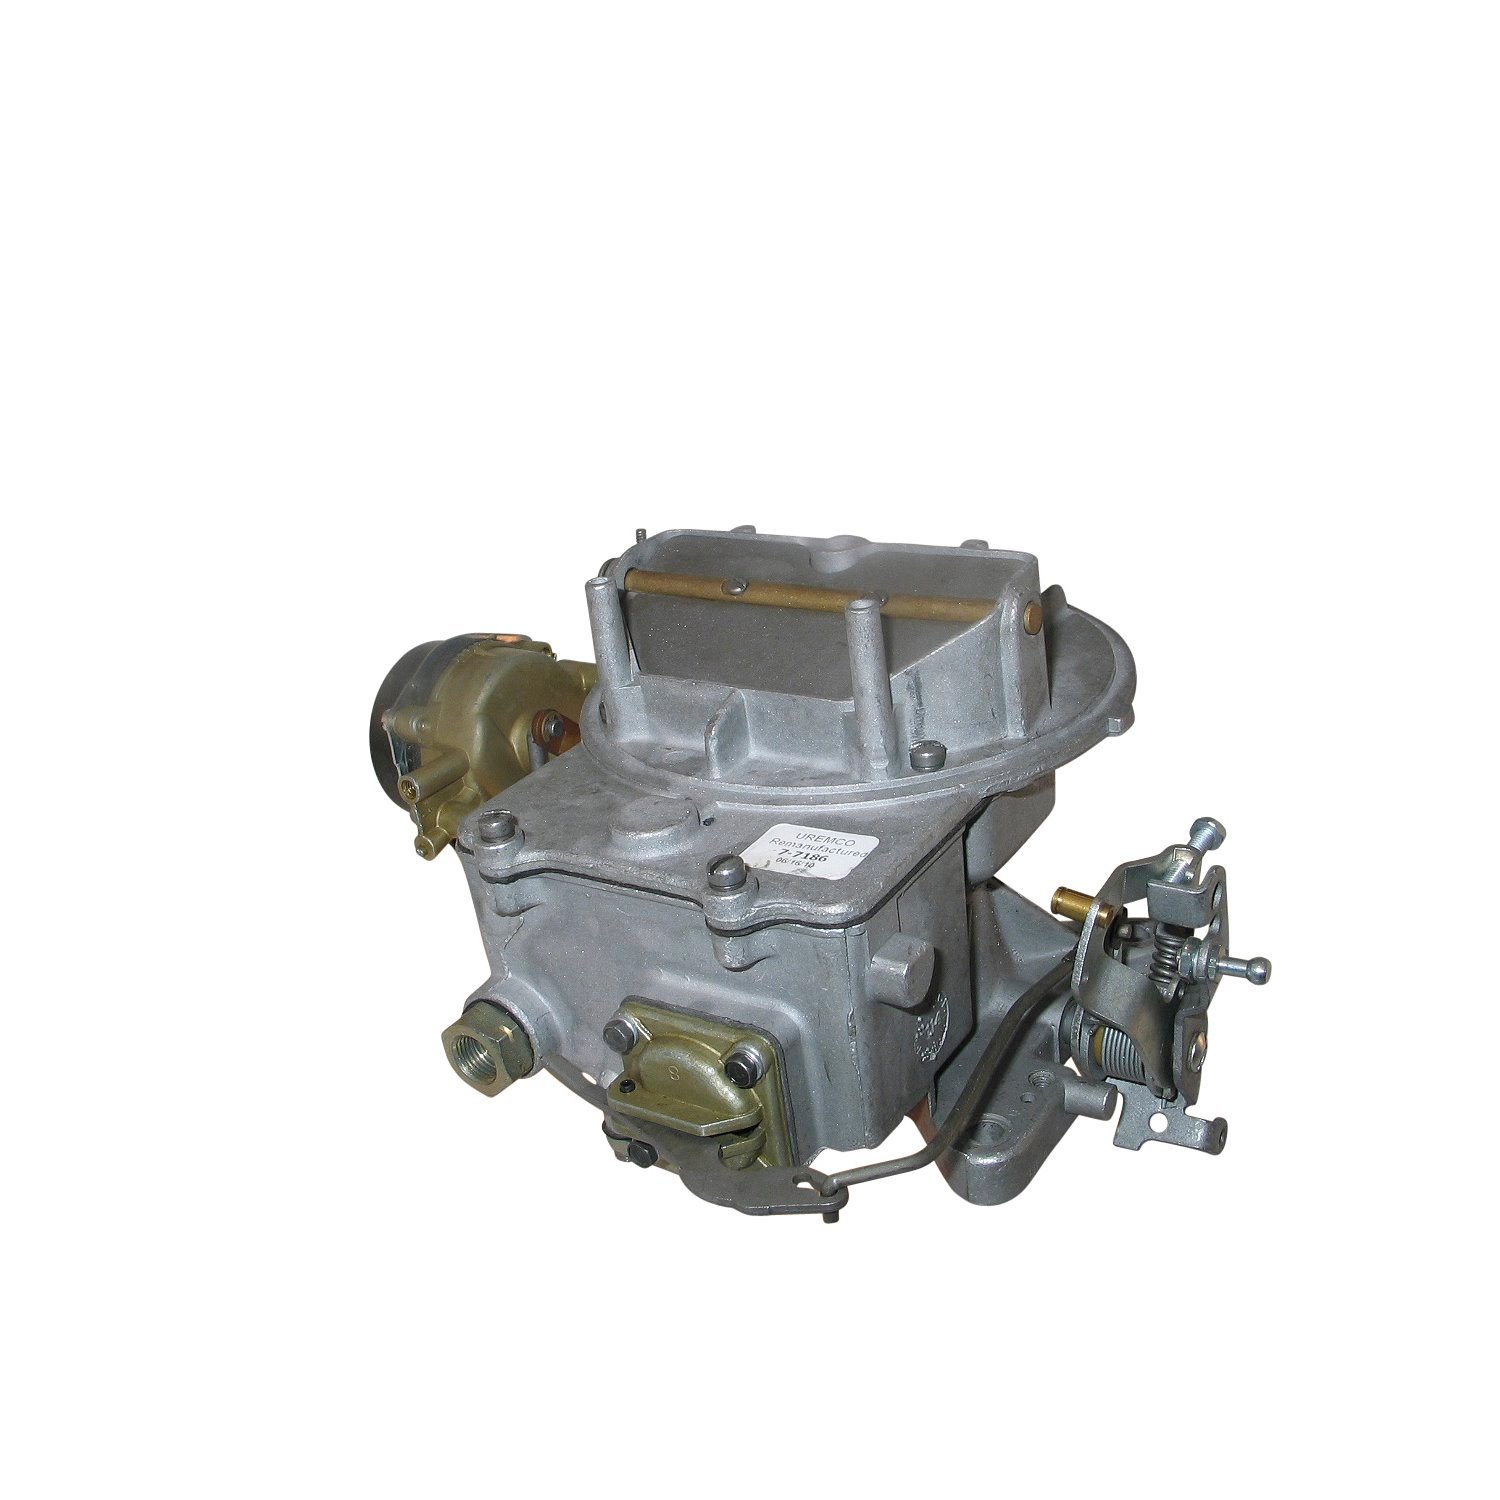 7-7185 Motorcraft Remanufactured Carburetor, 2100A-Style